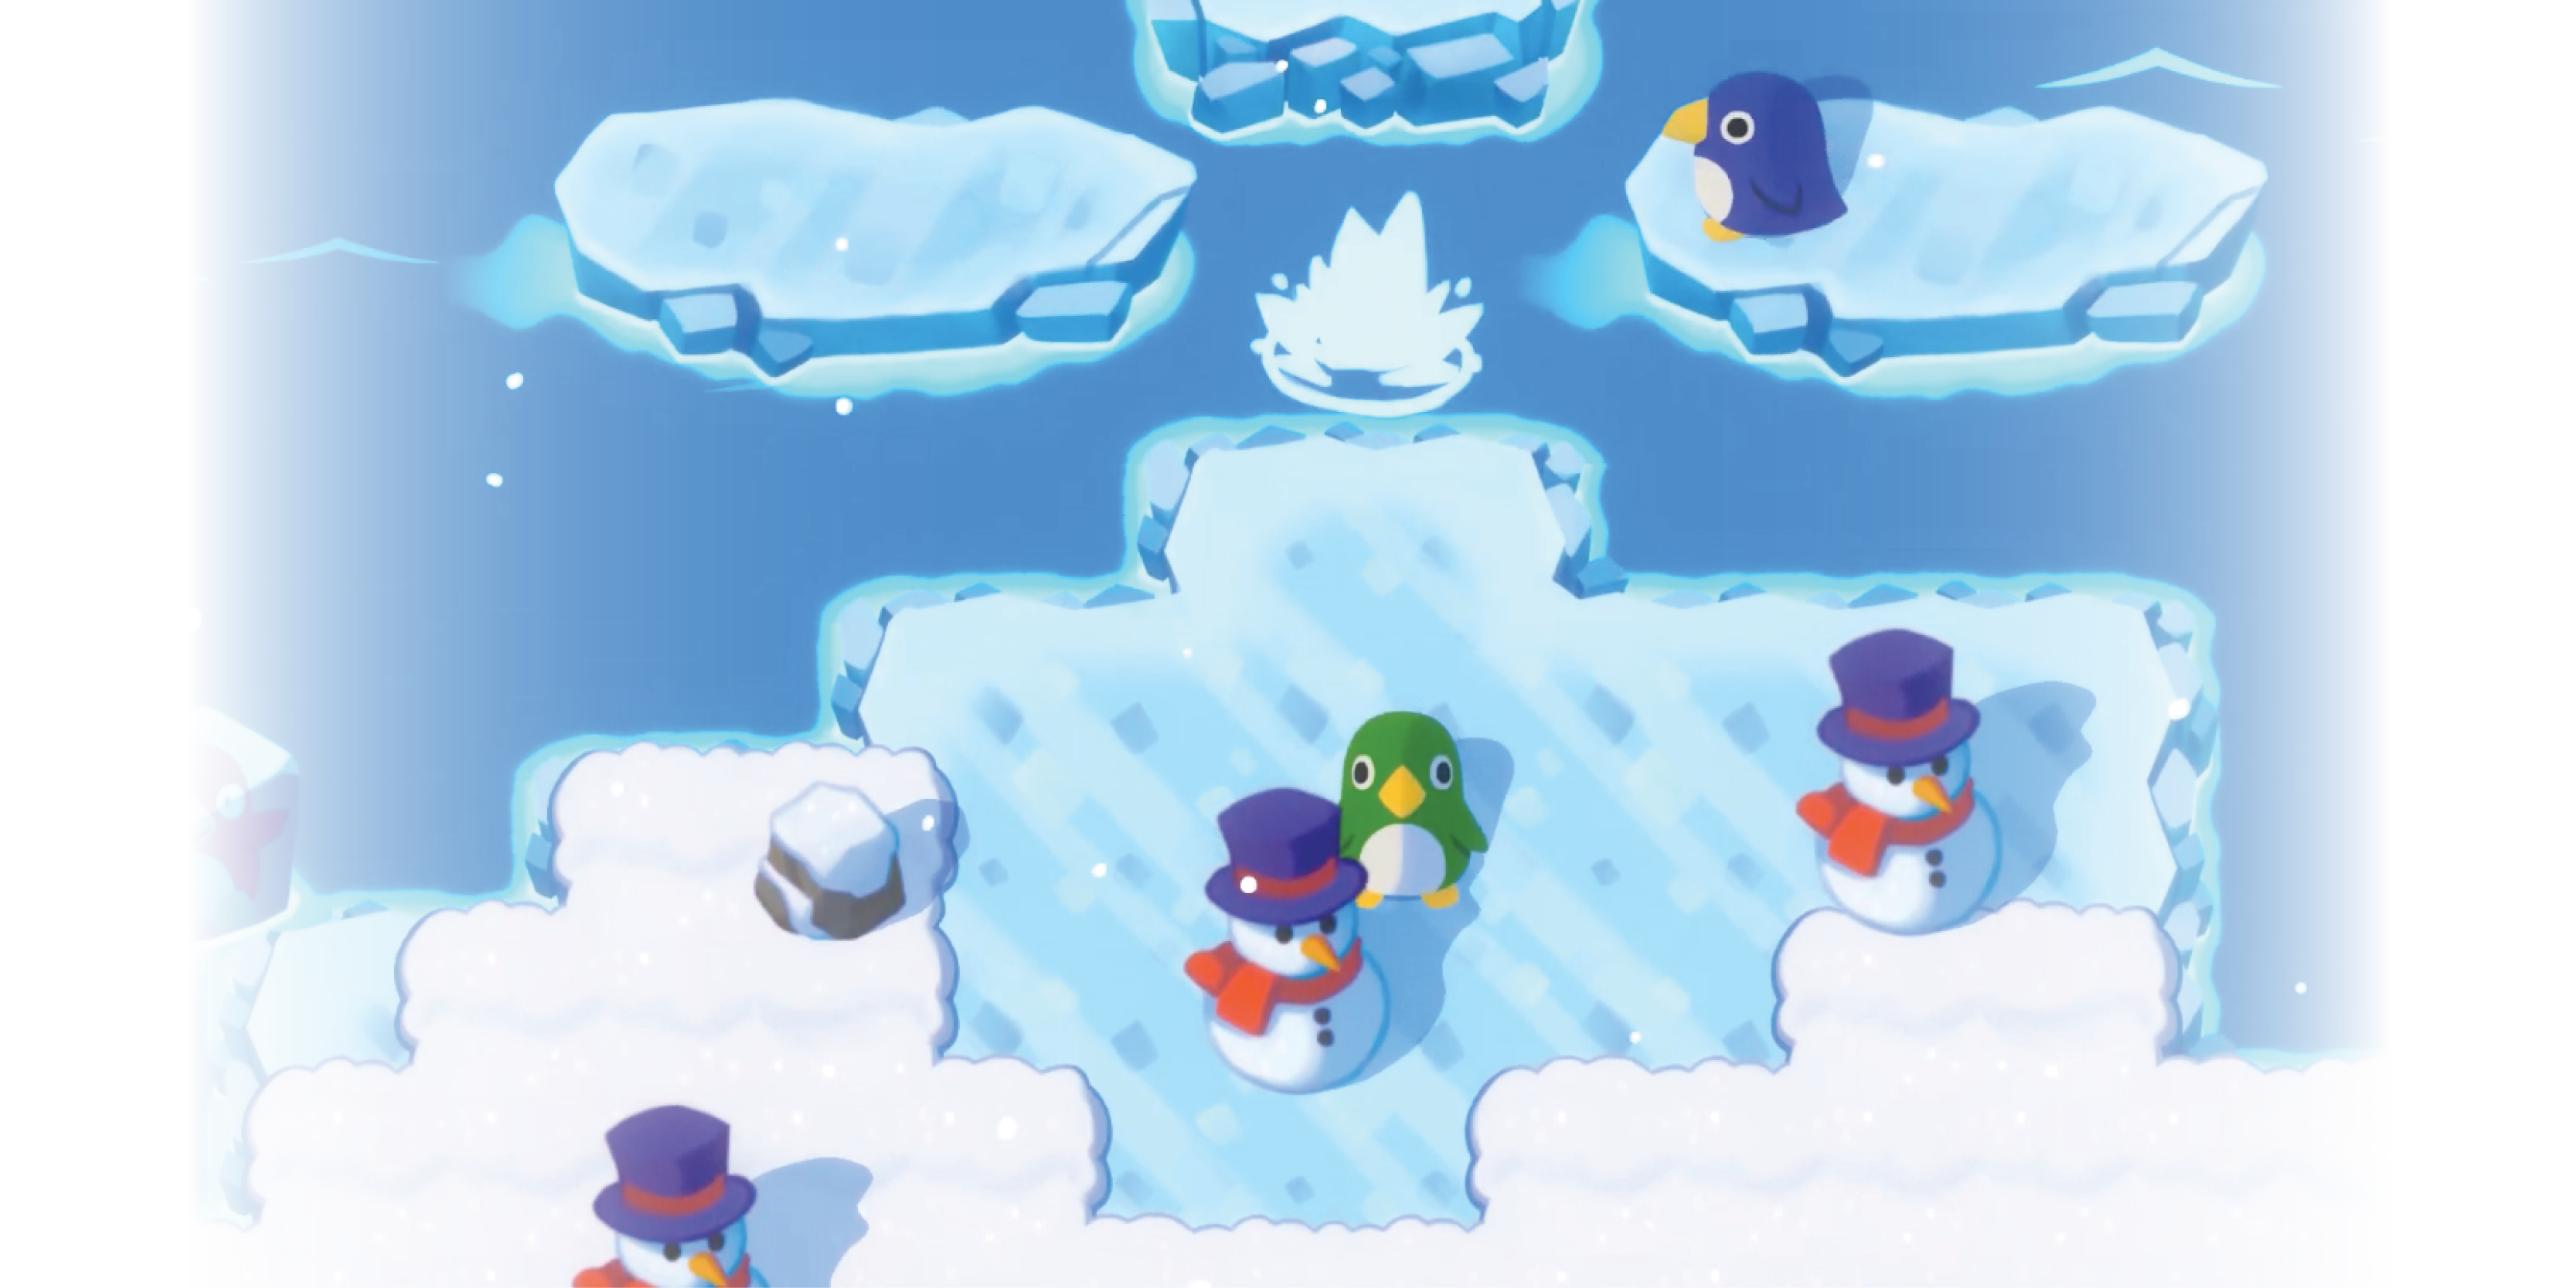 Gameplay screenshot of game Slip Slap 'n' Quack by Gud Games